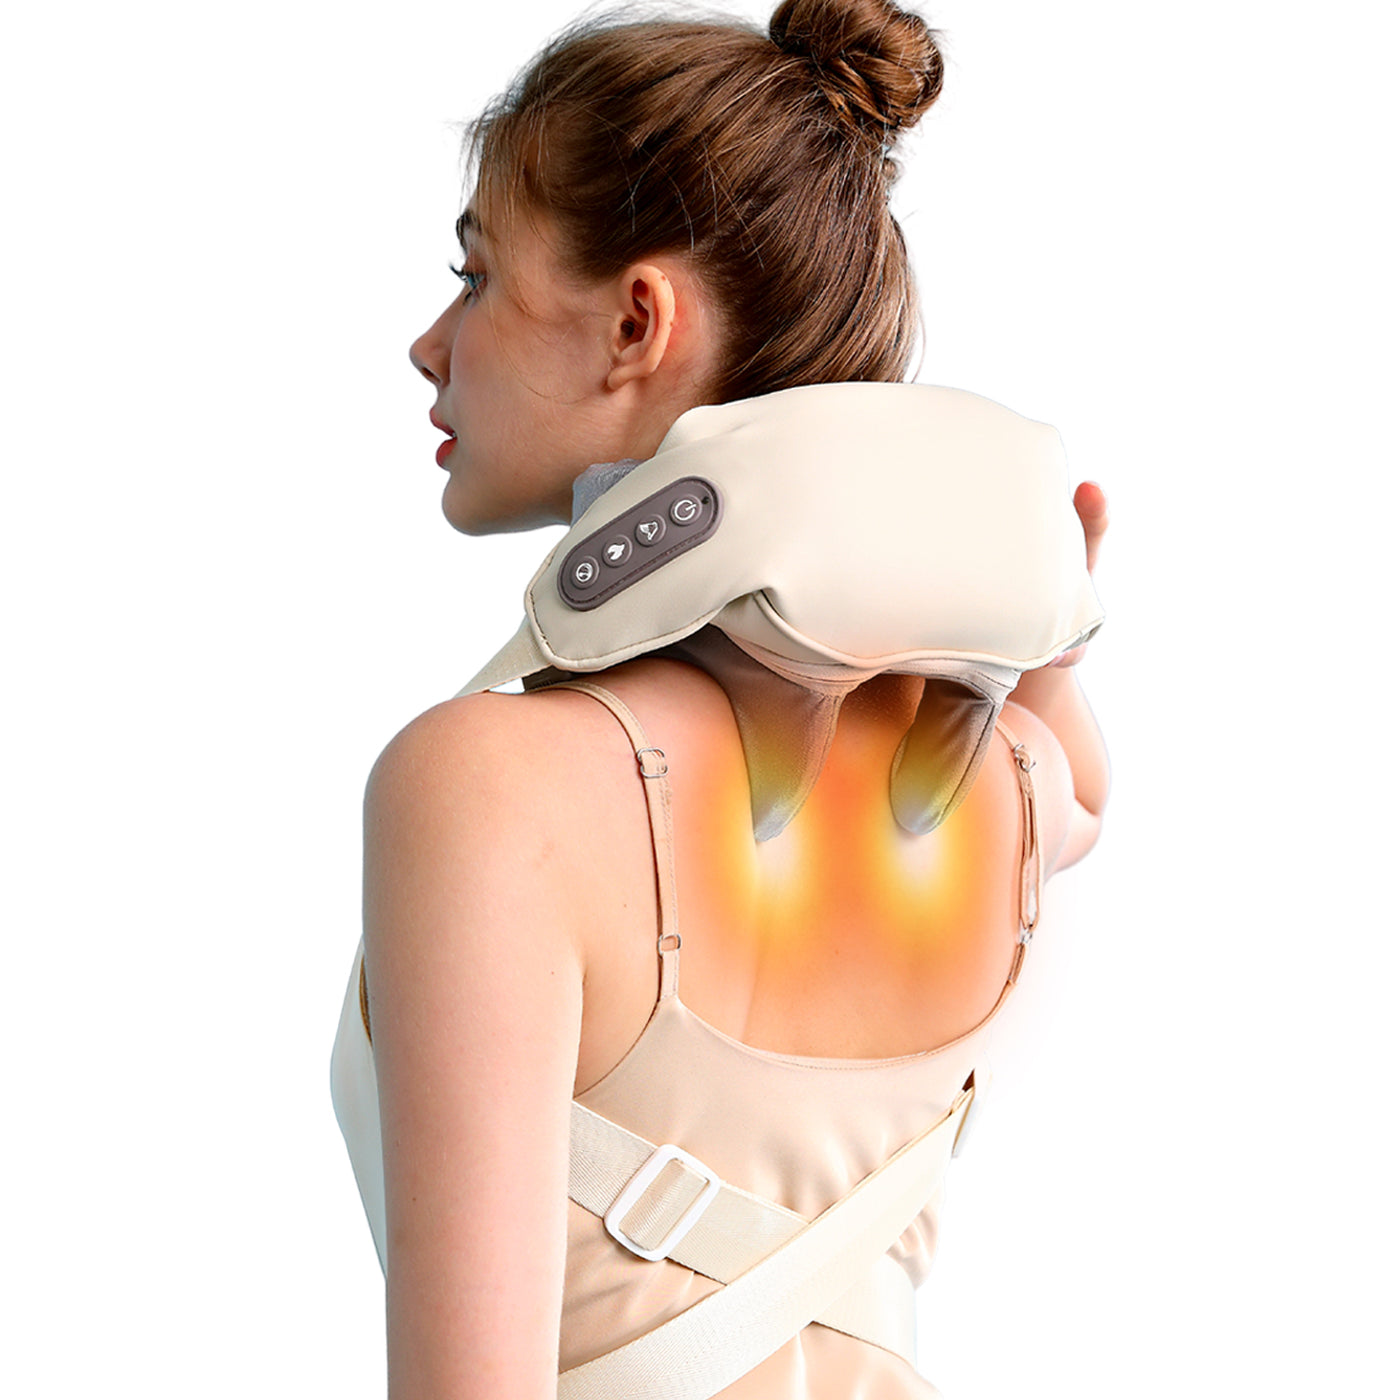 Neck Massager, Cervical Relaxer Handheld Self Muscle Massage for